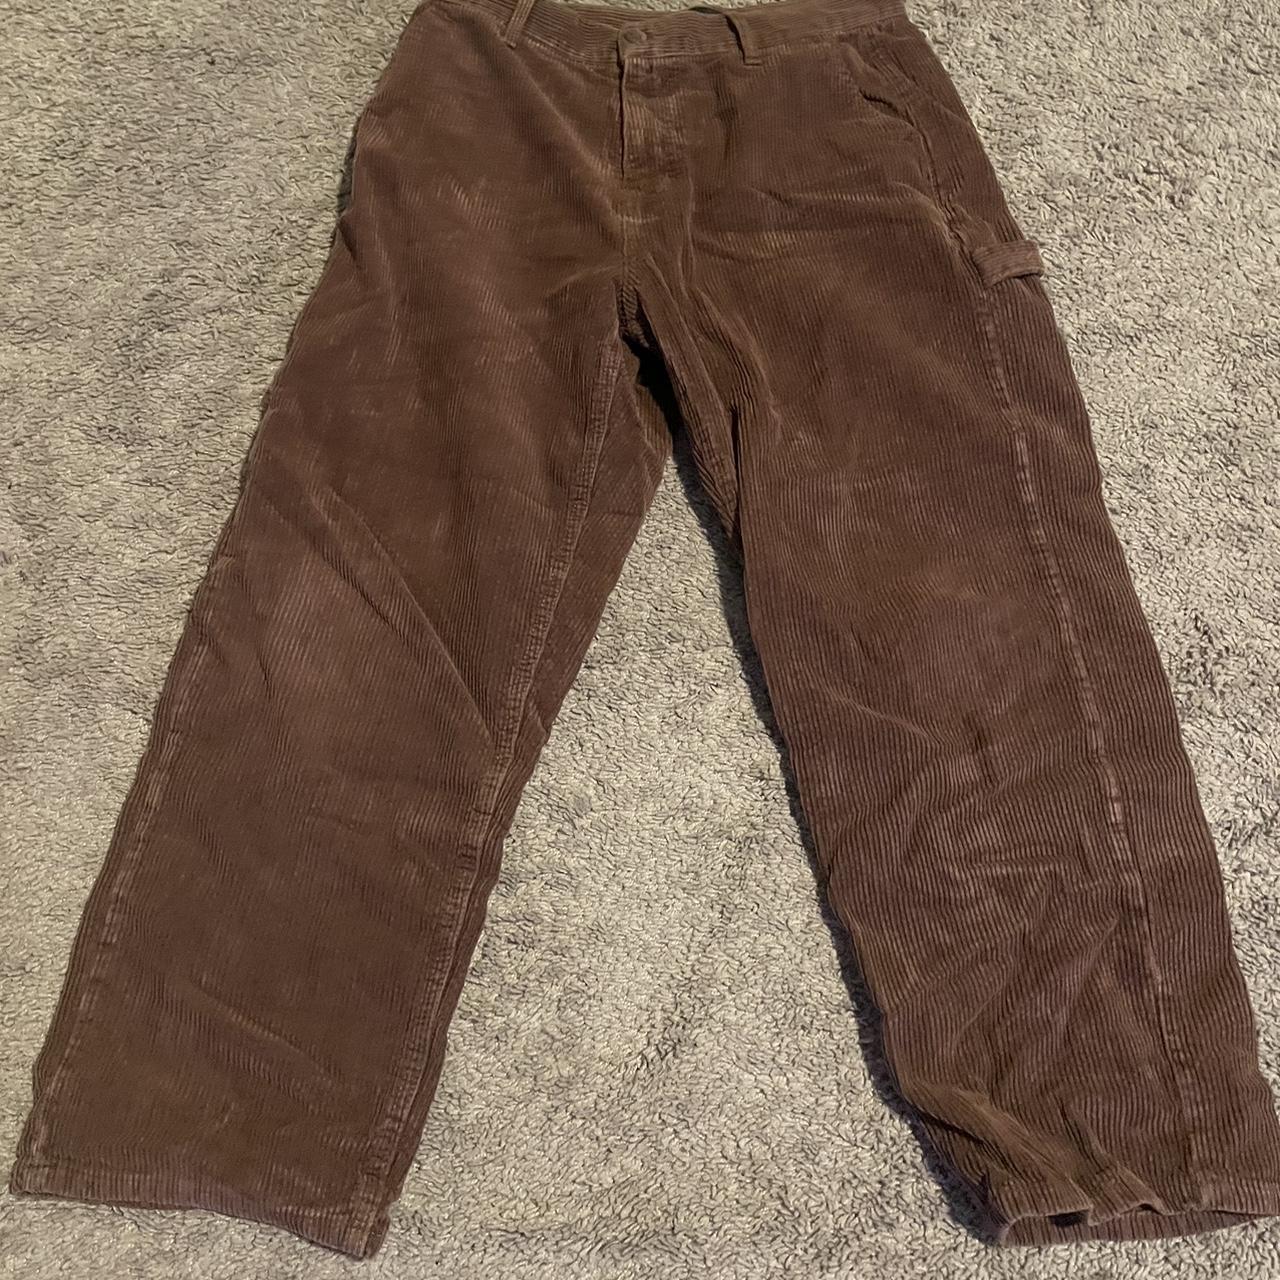 Rsq brown corduroy utility pants. 30 x 30 - Depop